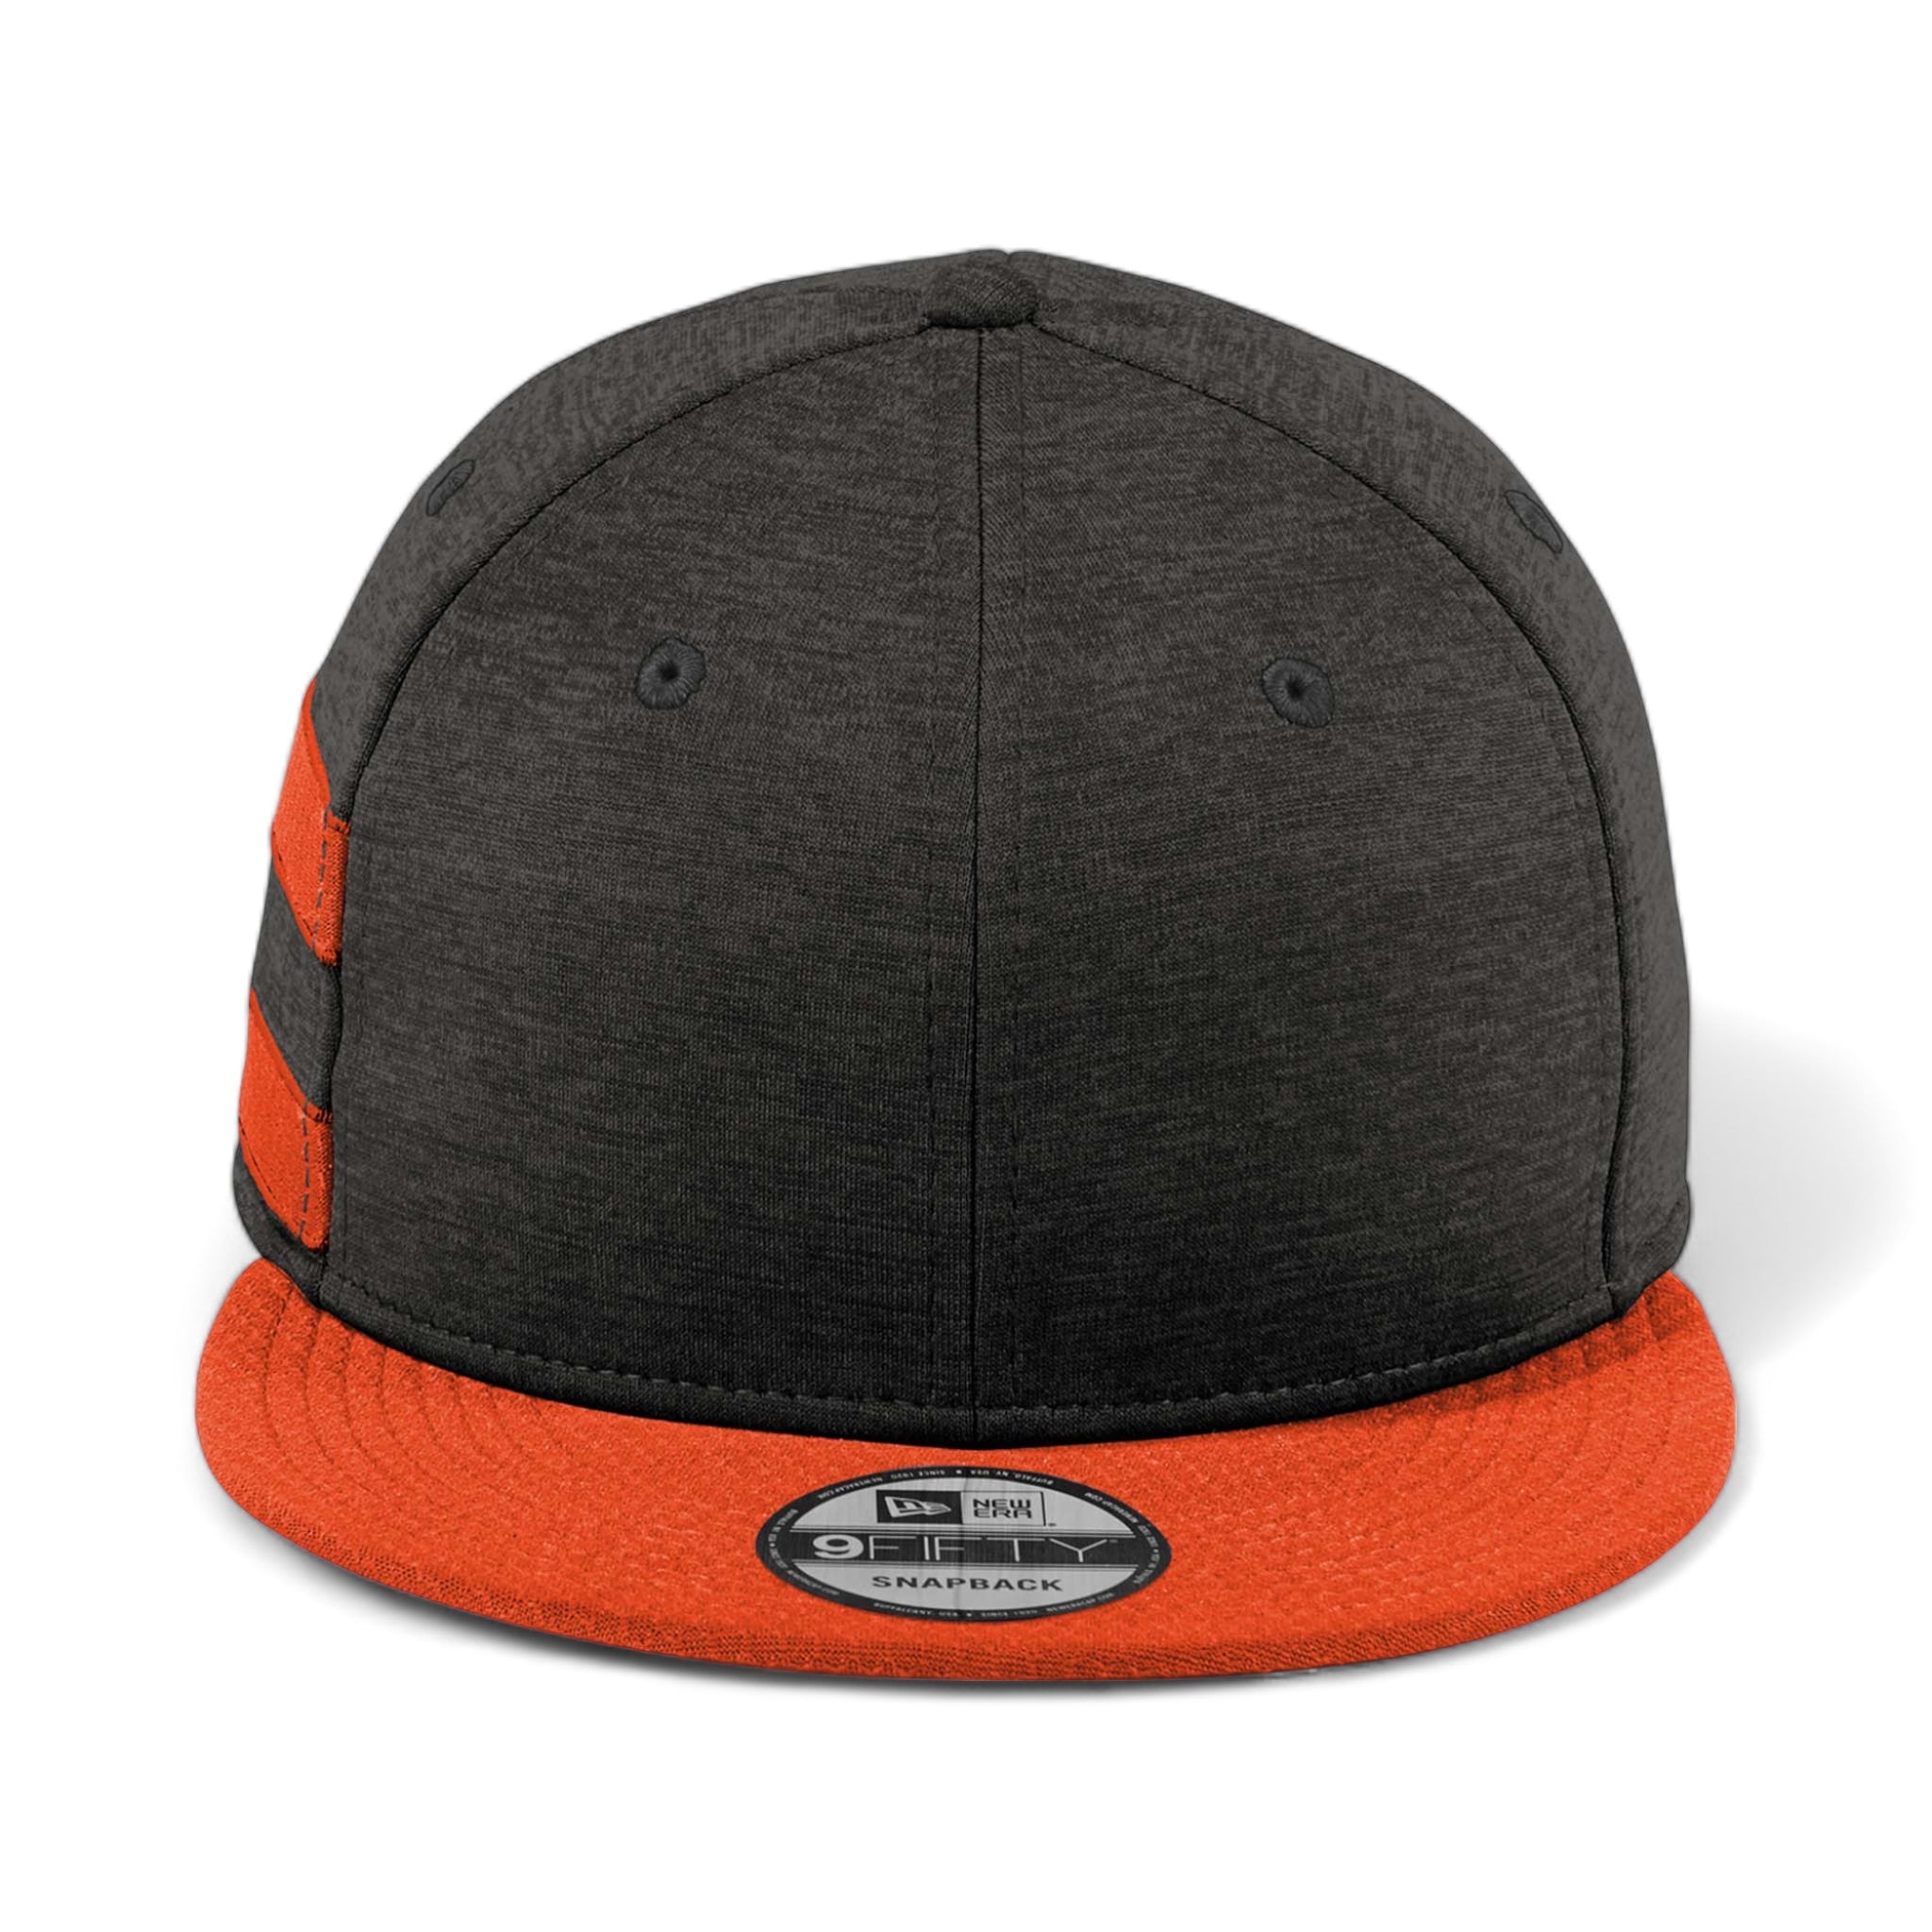 Front view of New Era NE408 custom hat in black shadow heather and deep orange